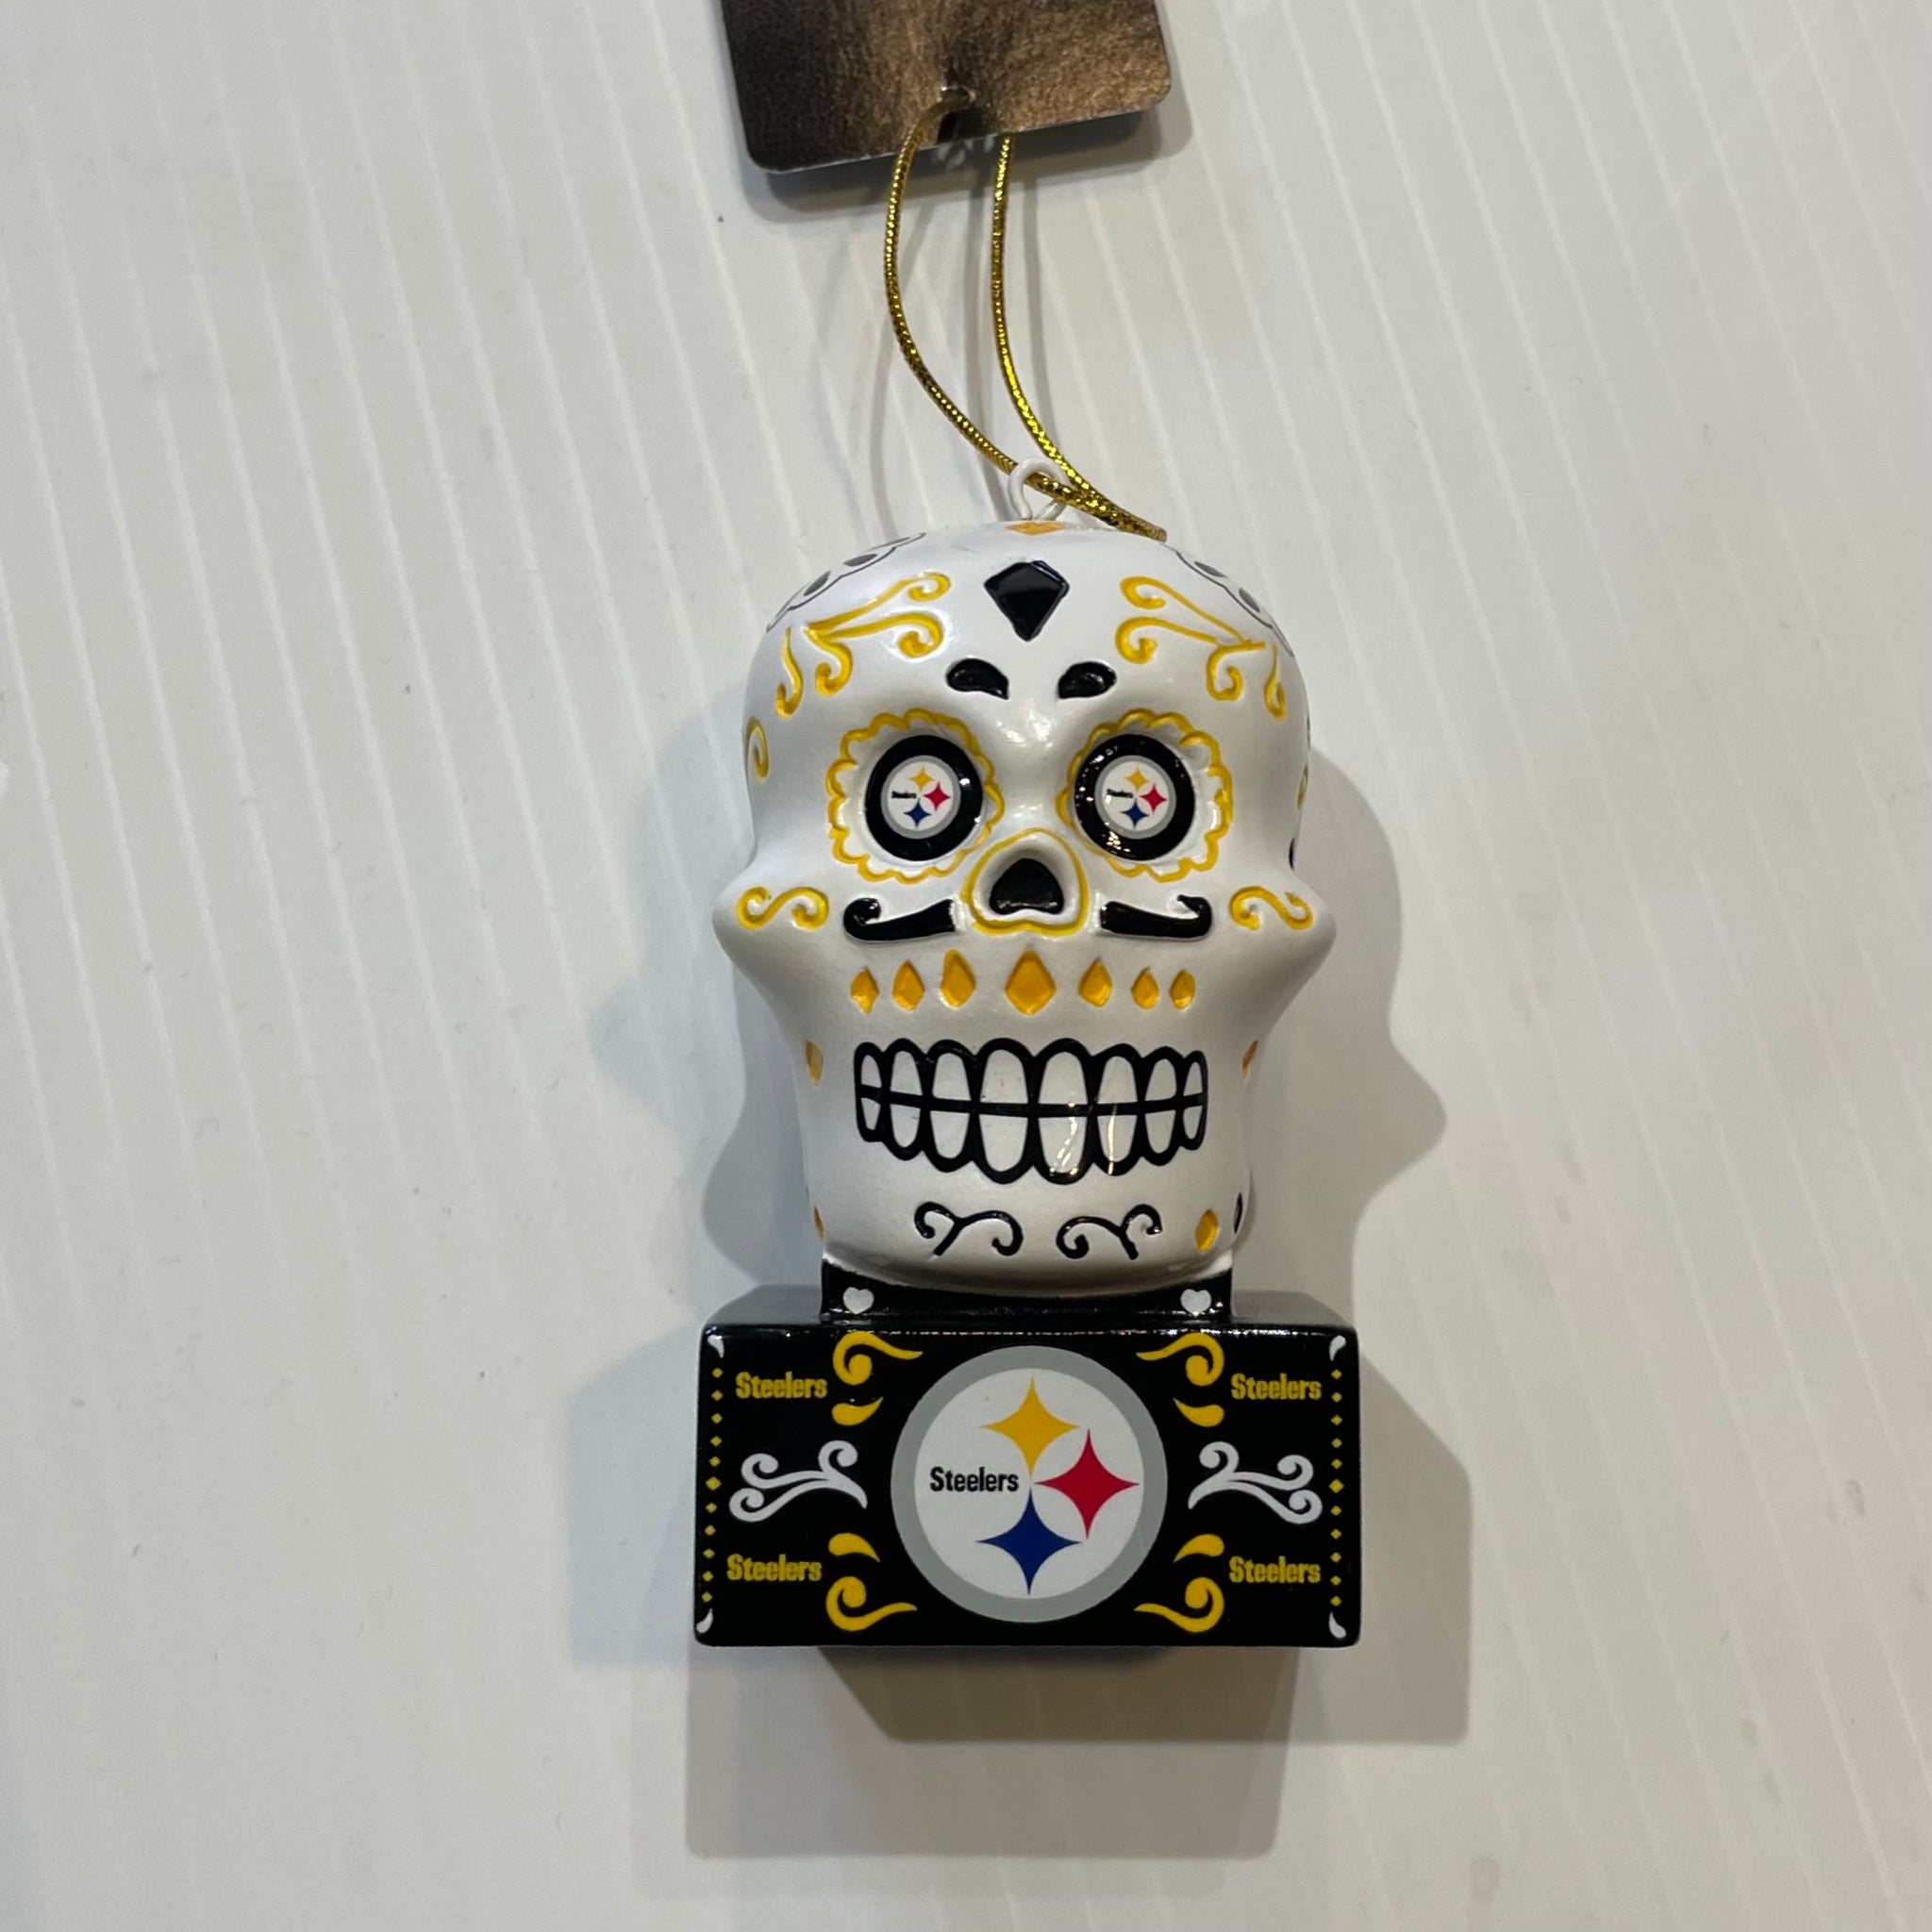 Pittsburgh Steelers Sugar Skull Statue Ornament